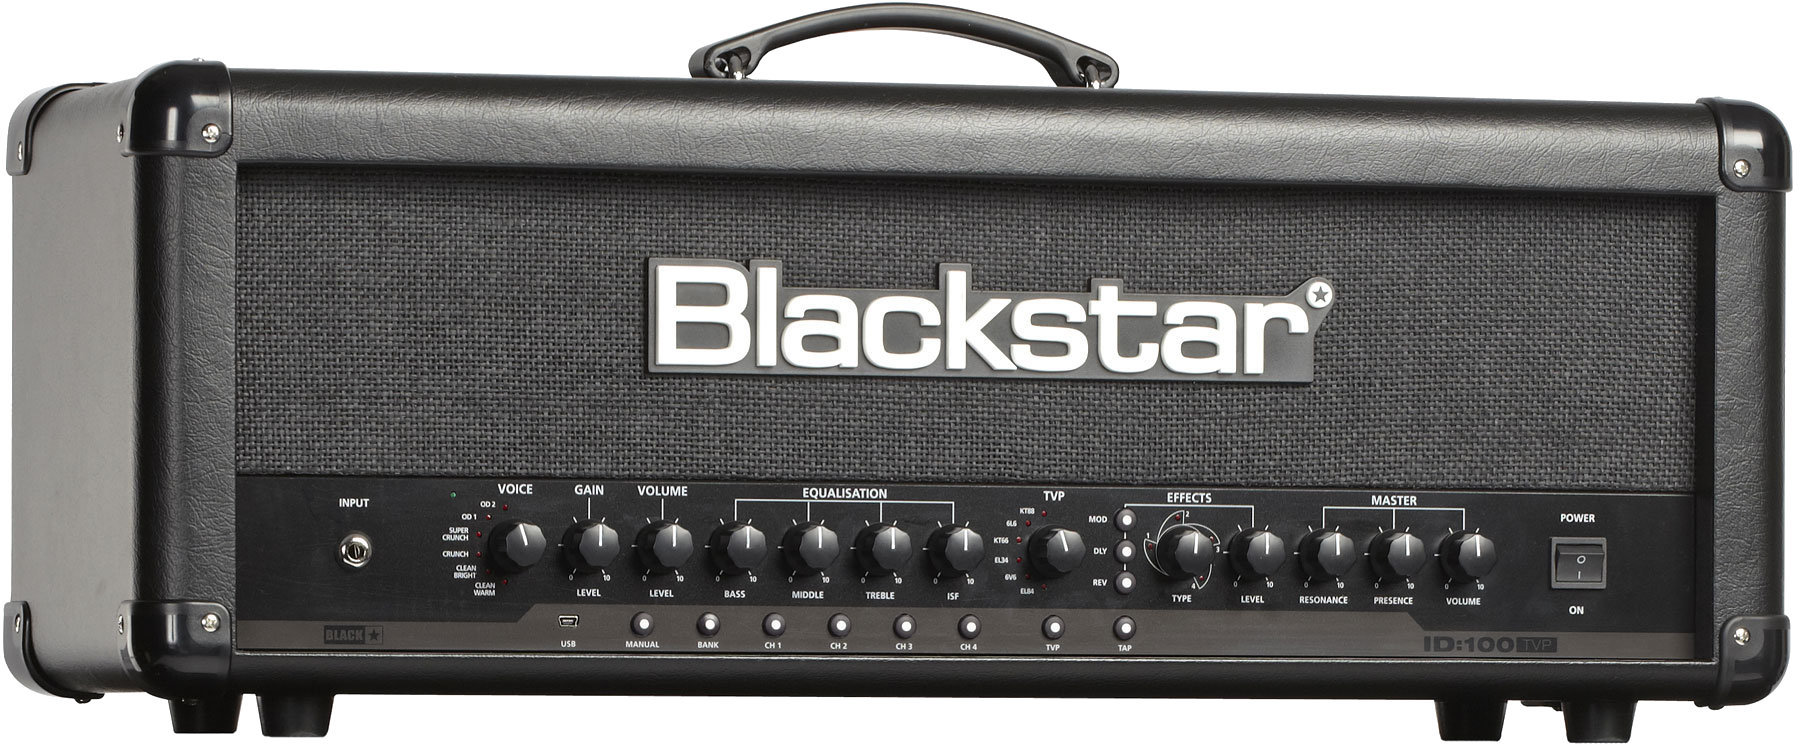 Modeling gitarsko pojačalo Blackstar ID: 100 TVP Head